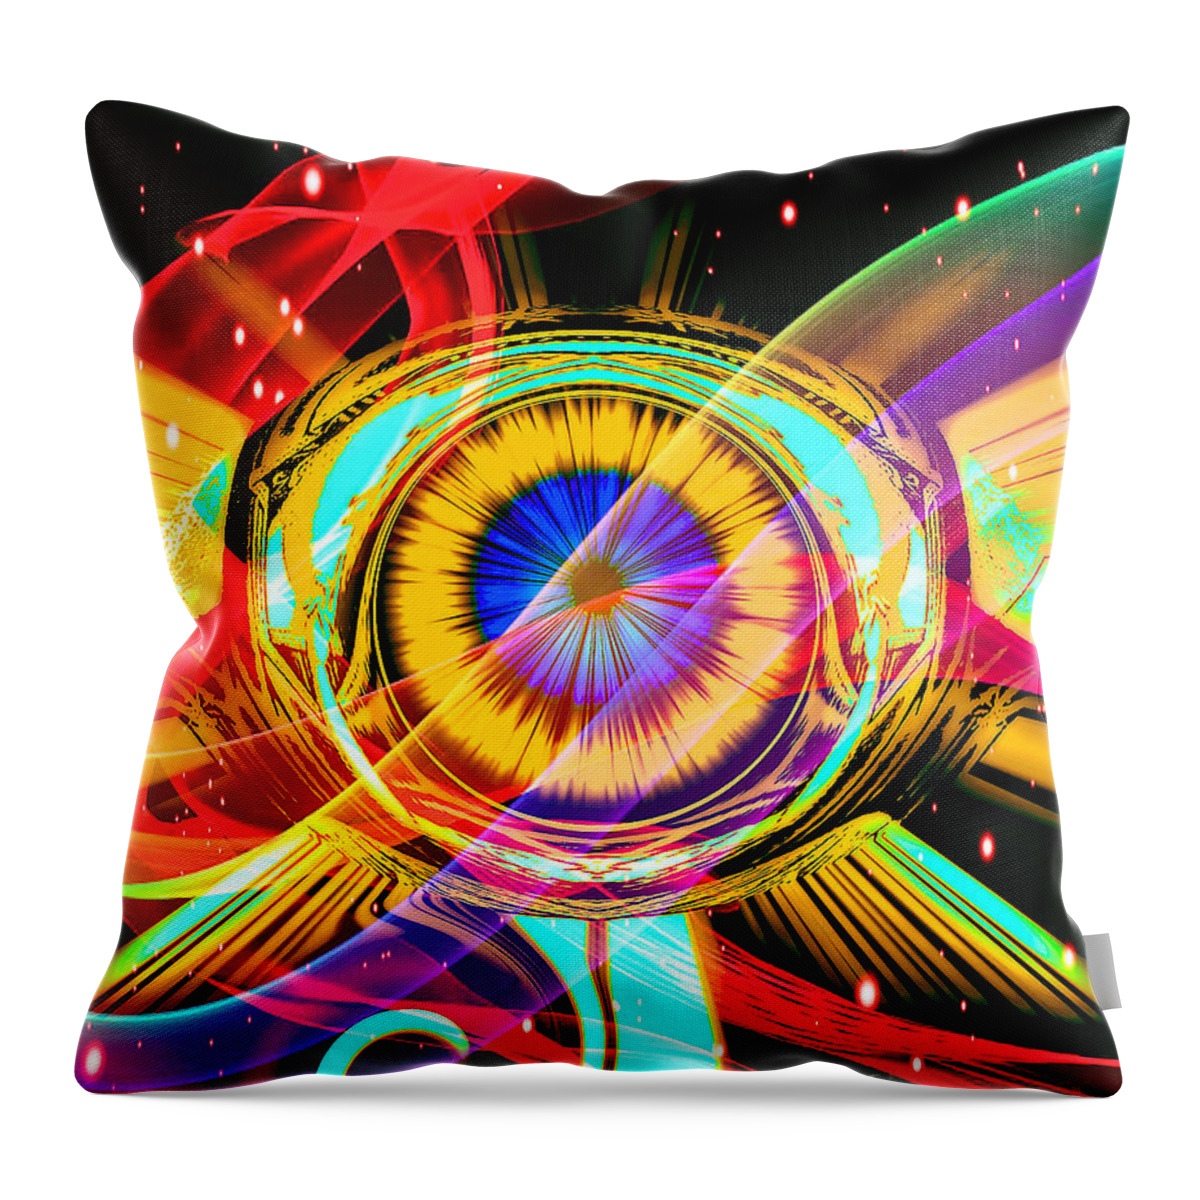 Illuminate Throw Pillow featuring the digital art Eye Of Horus by Eleni Synodinou